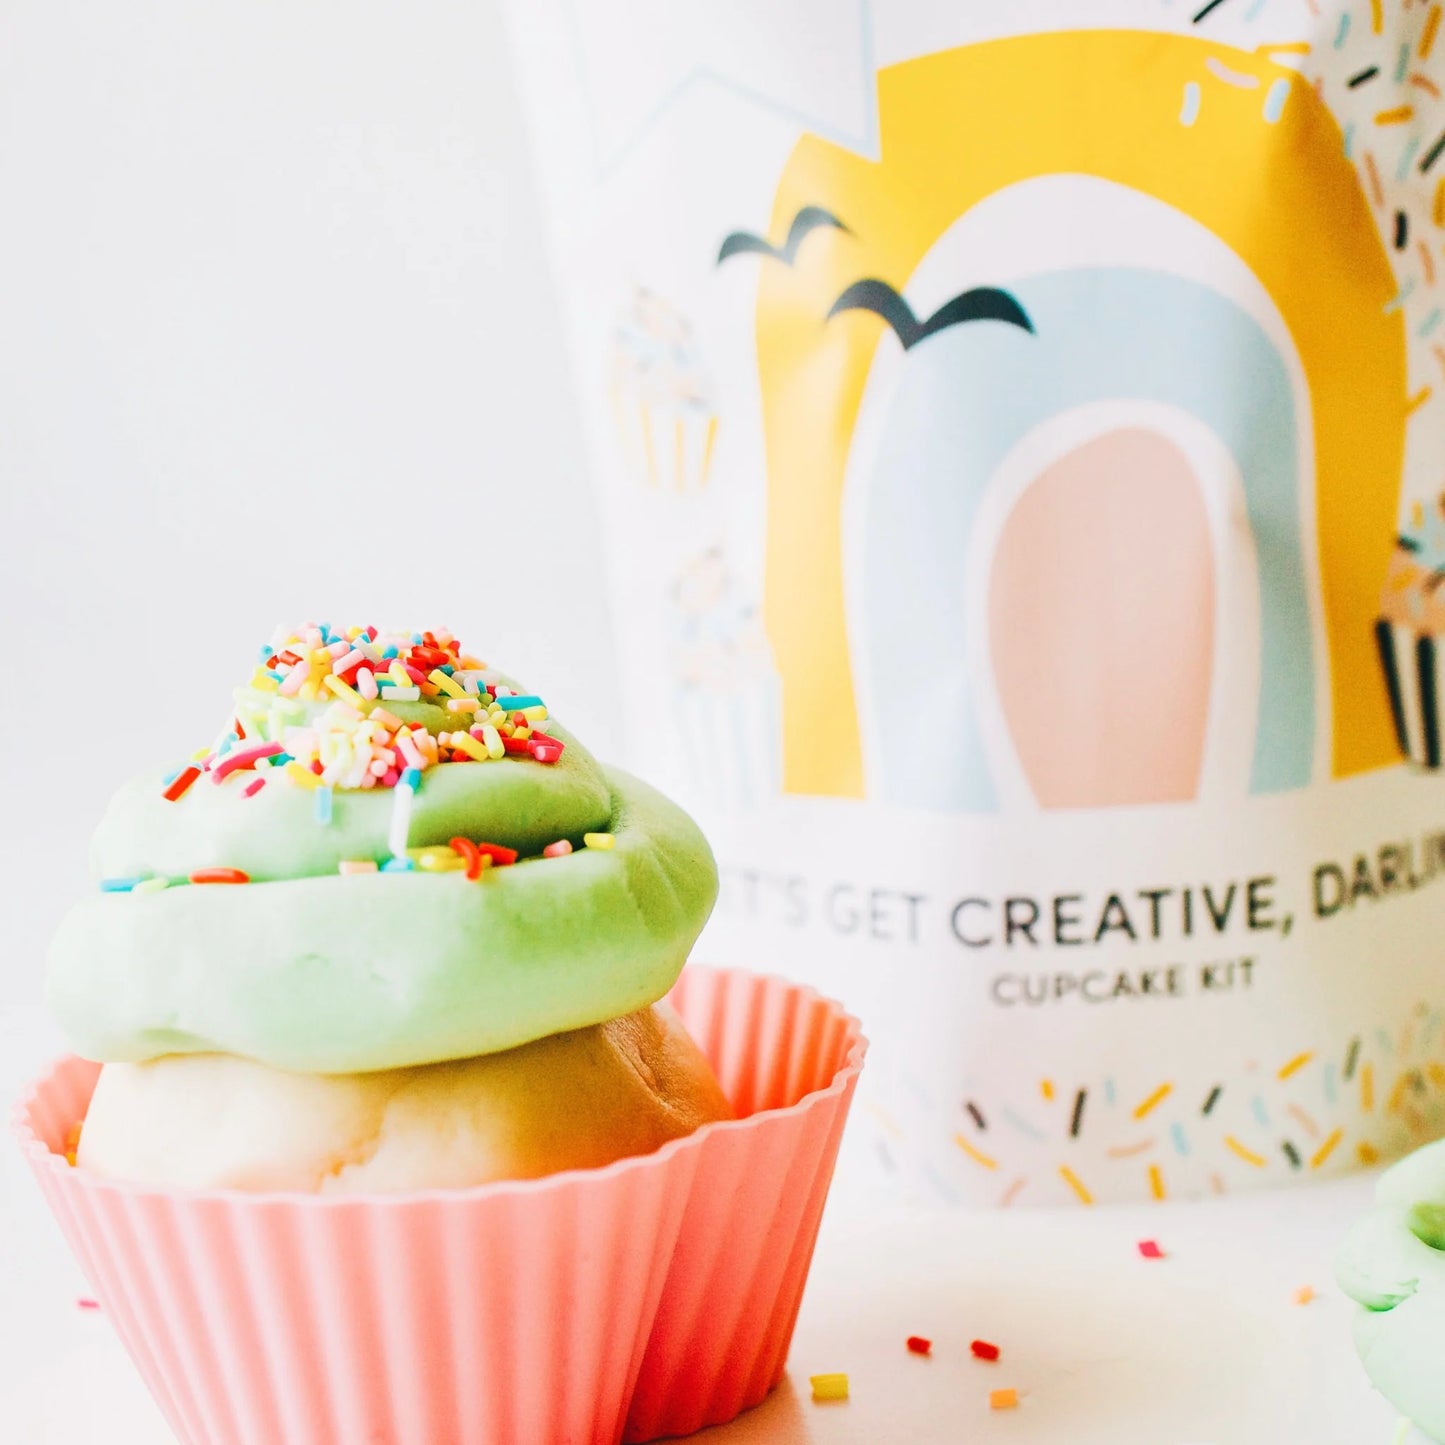 Let's Get Creative Darling Dough Kit - Cupcake